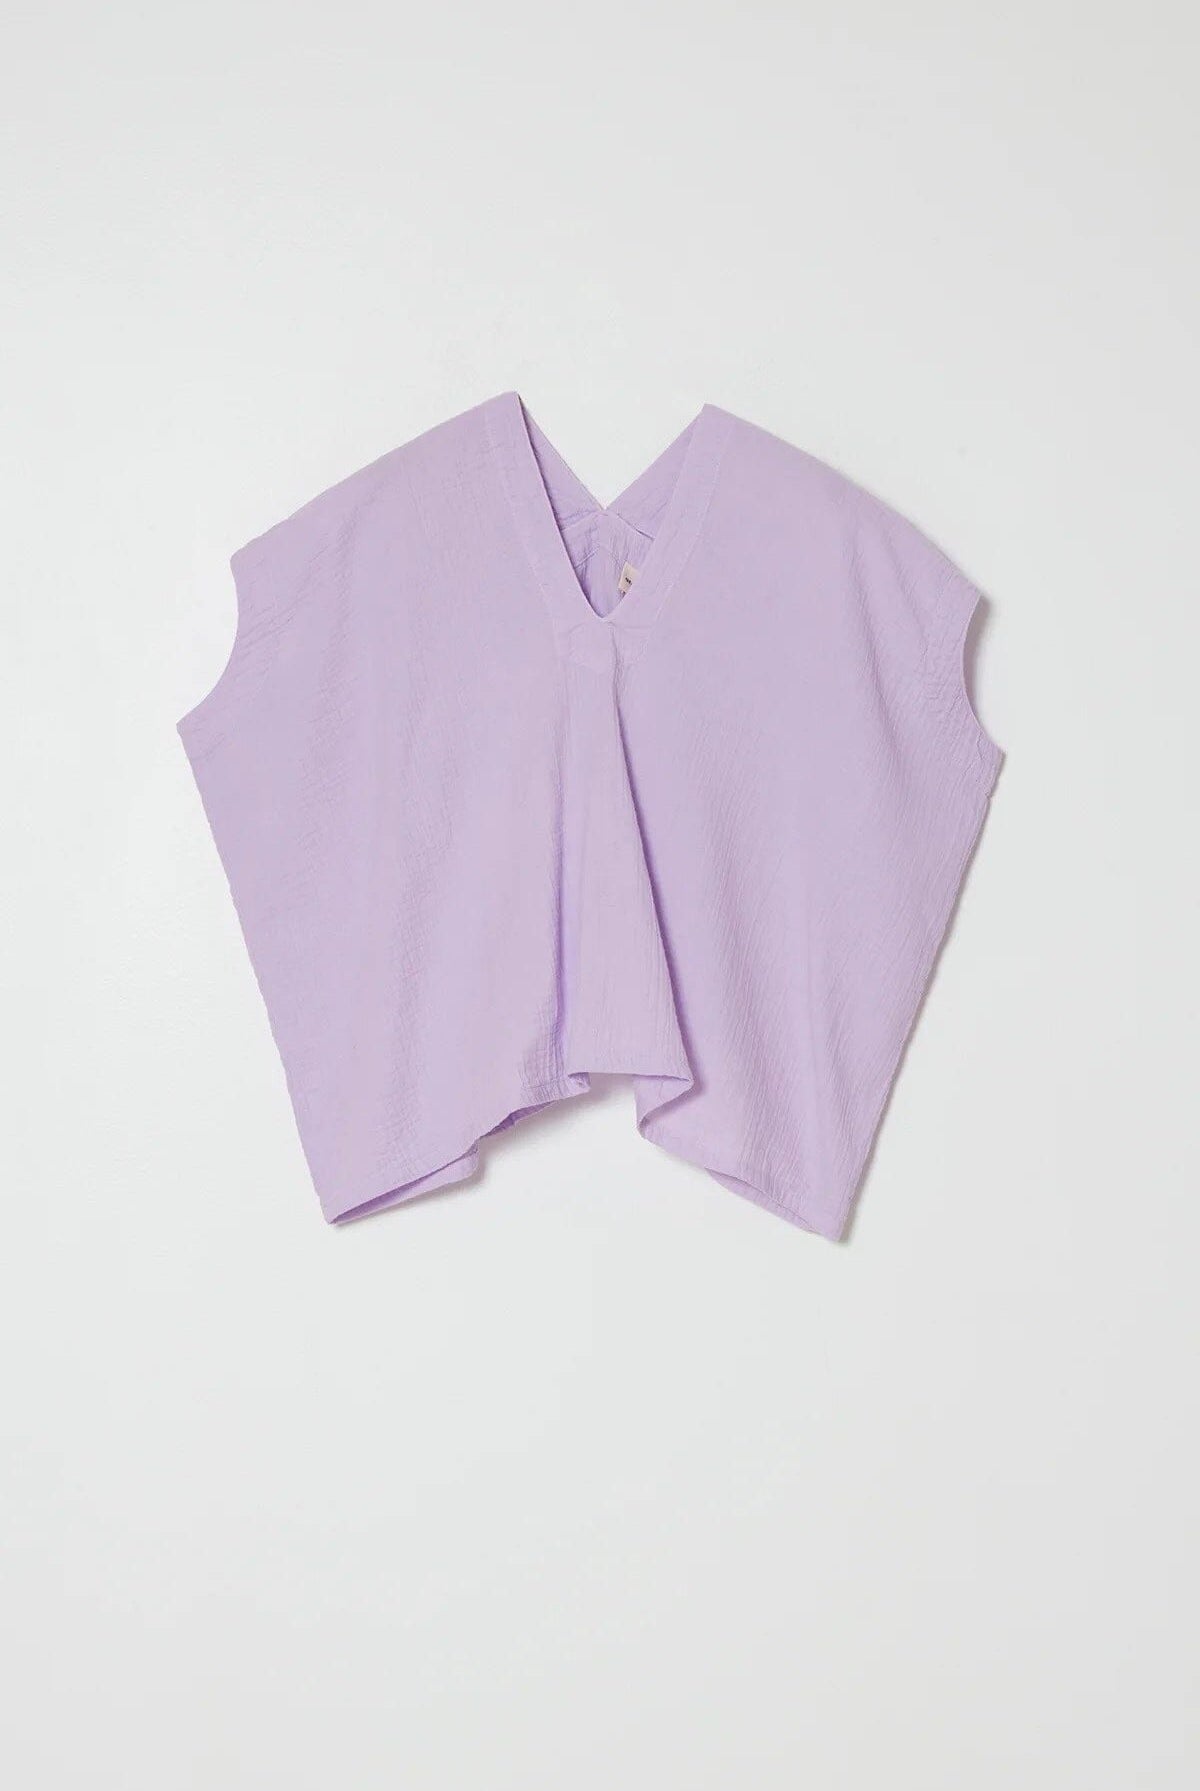 Atelier Delphine | Celeste Top In Lavender Fog - SHOP YUCCA Shirts & Tops ATELIER DELPHINE - YUCCA 